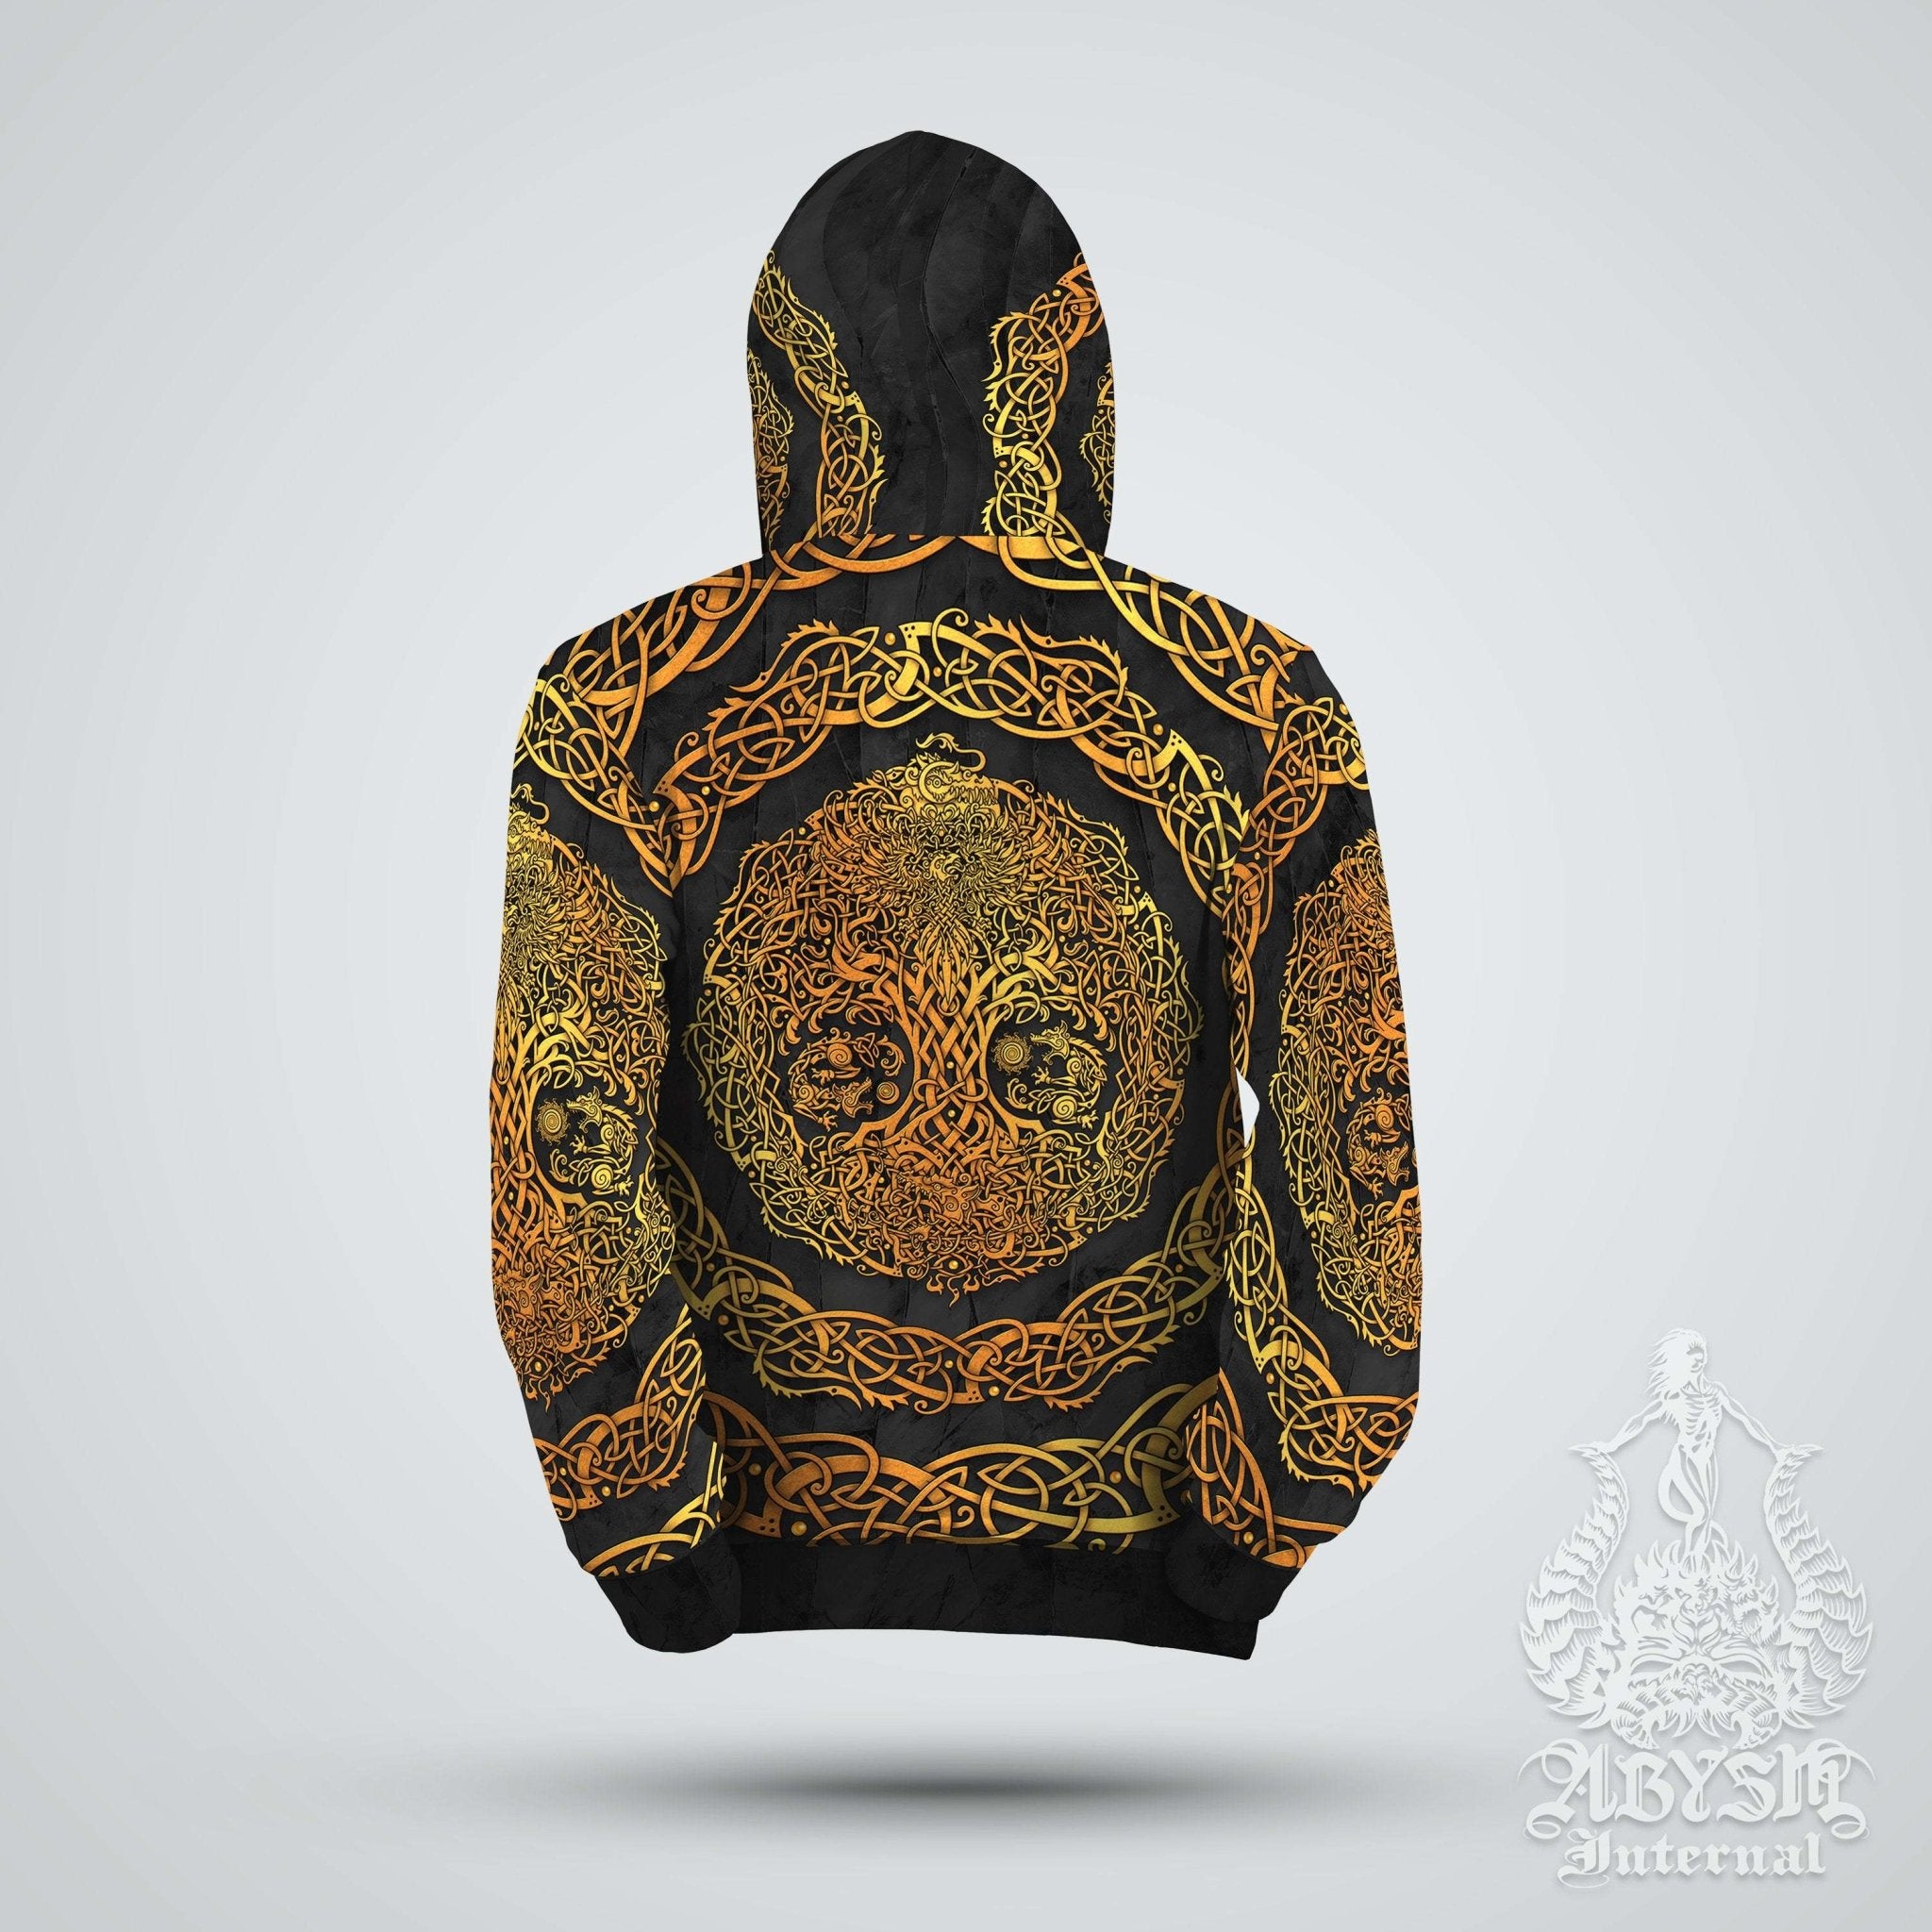 Yggdrasil Hoodie, Viking Sweater, Norse Street Outfit, Tree of Life Streetwear, Alternative Clothing, Unisex - Gold Black - Abysm Internal